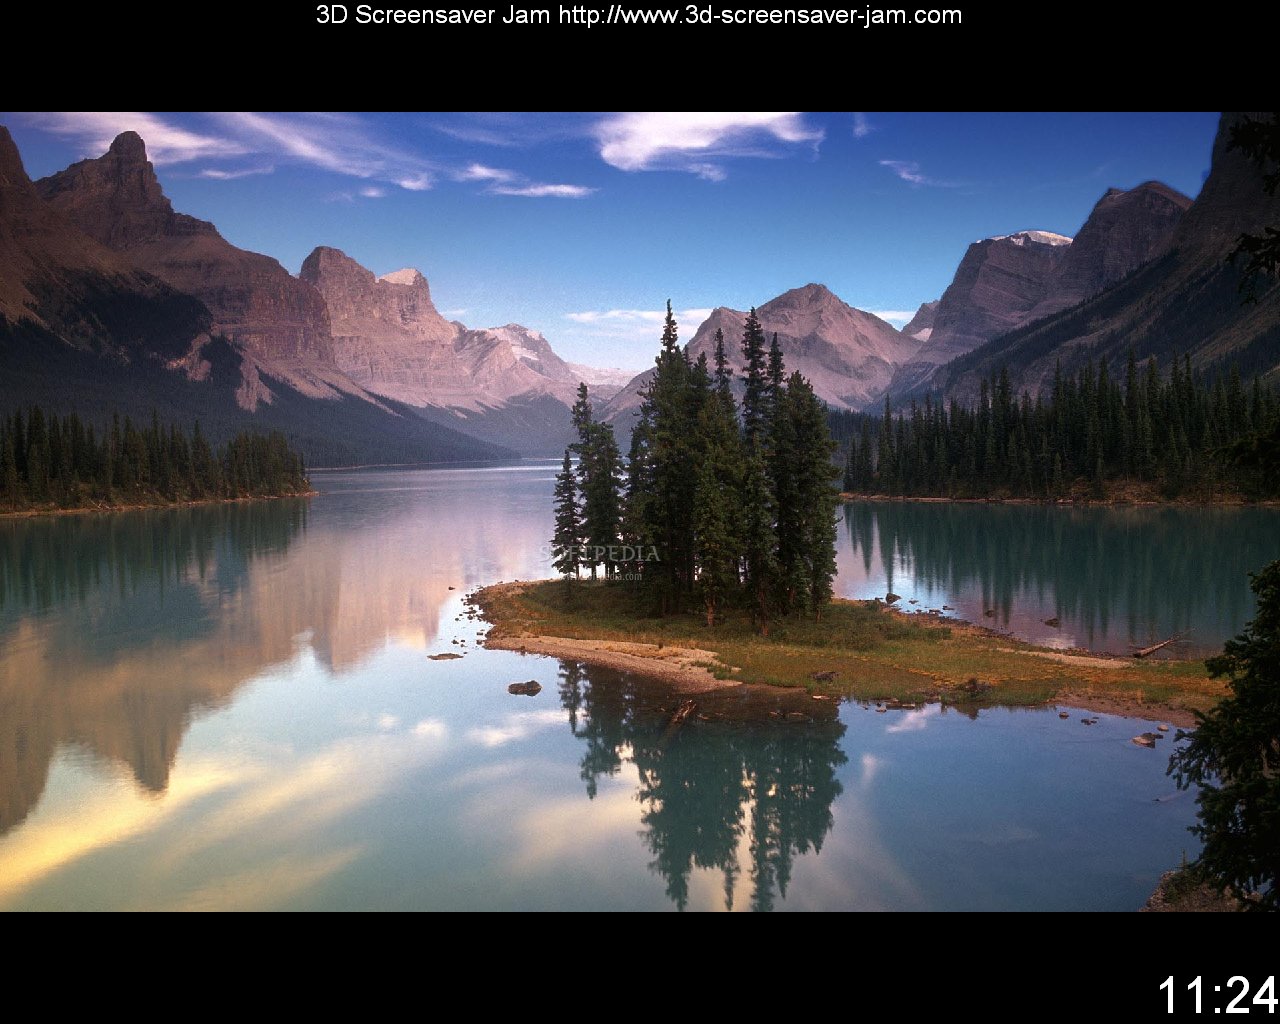 softpediacomWindows 7 Screensaver Screenshots screen capture 1280x1024